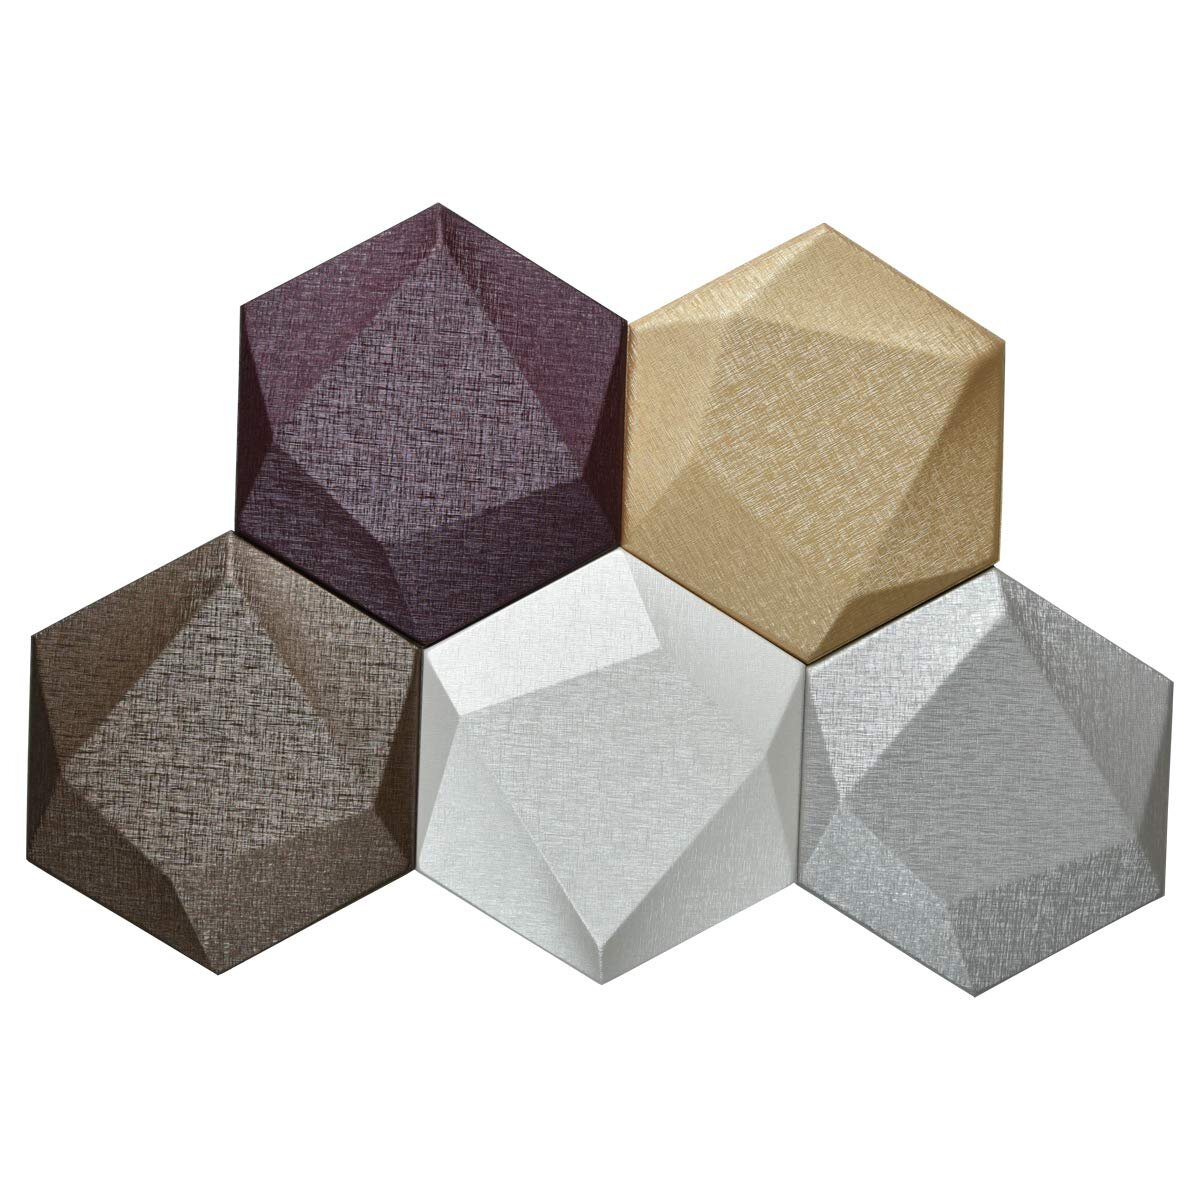 NEW: Honeycomb Frames! 🎨 🐝 - Mixtiles